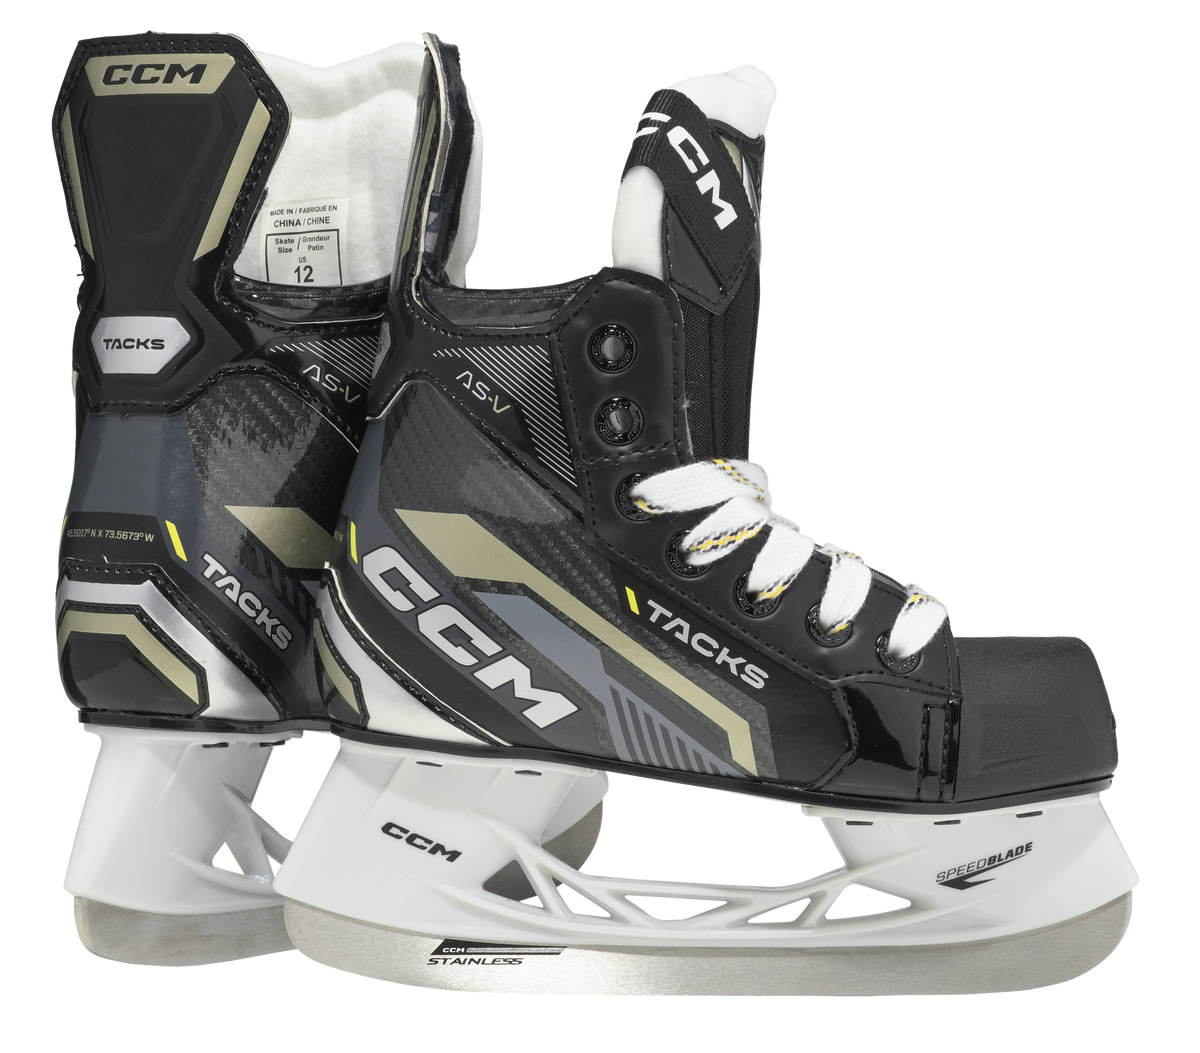 CCM Tacks AS-V patins de hockey enfant